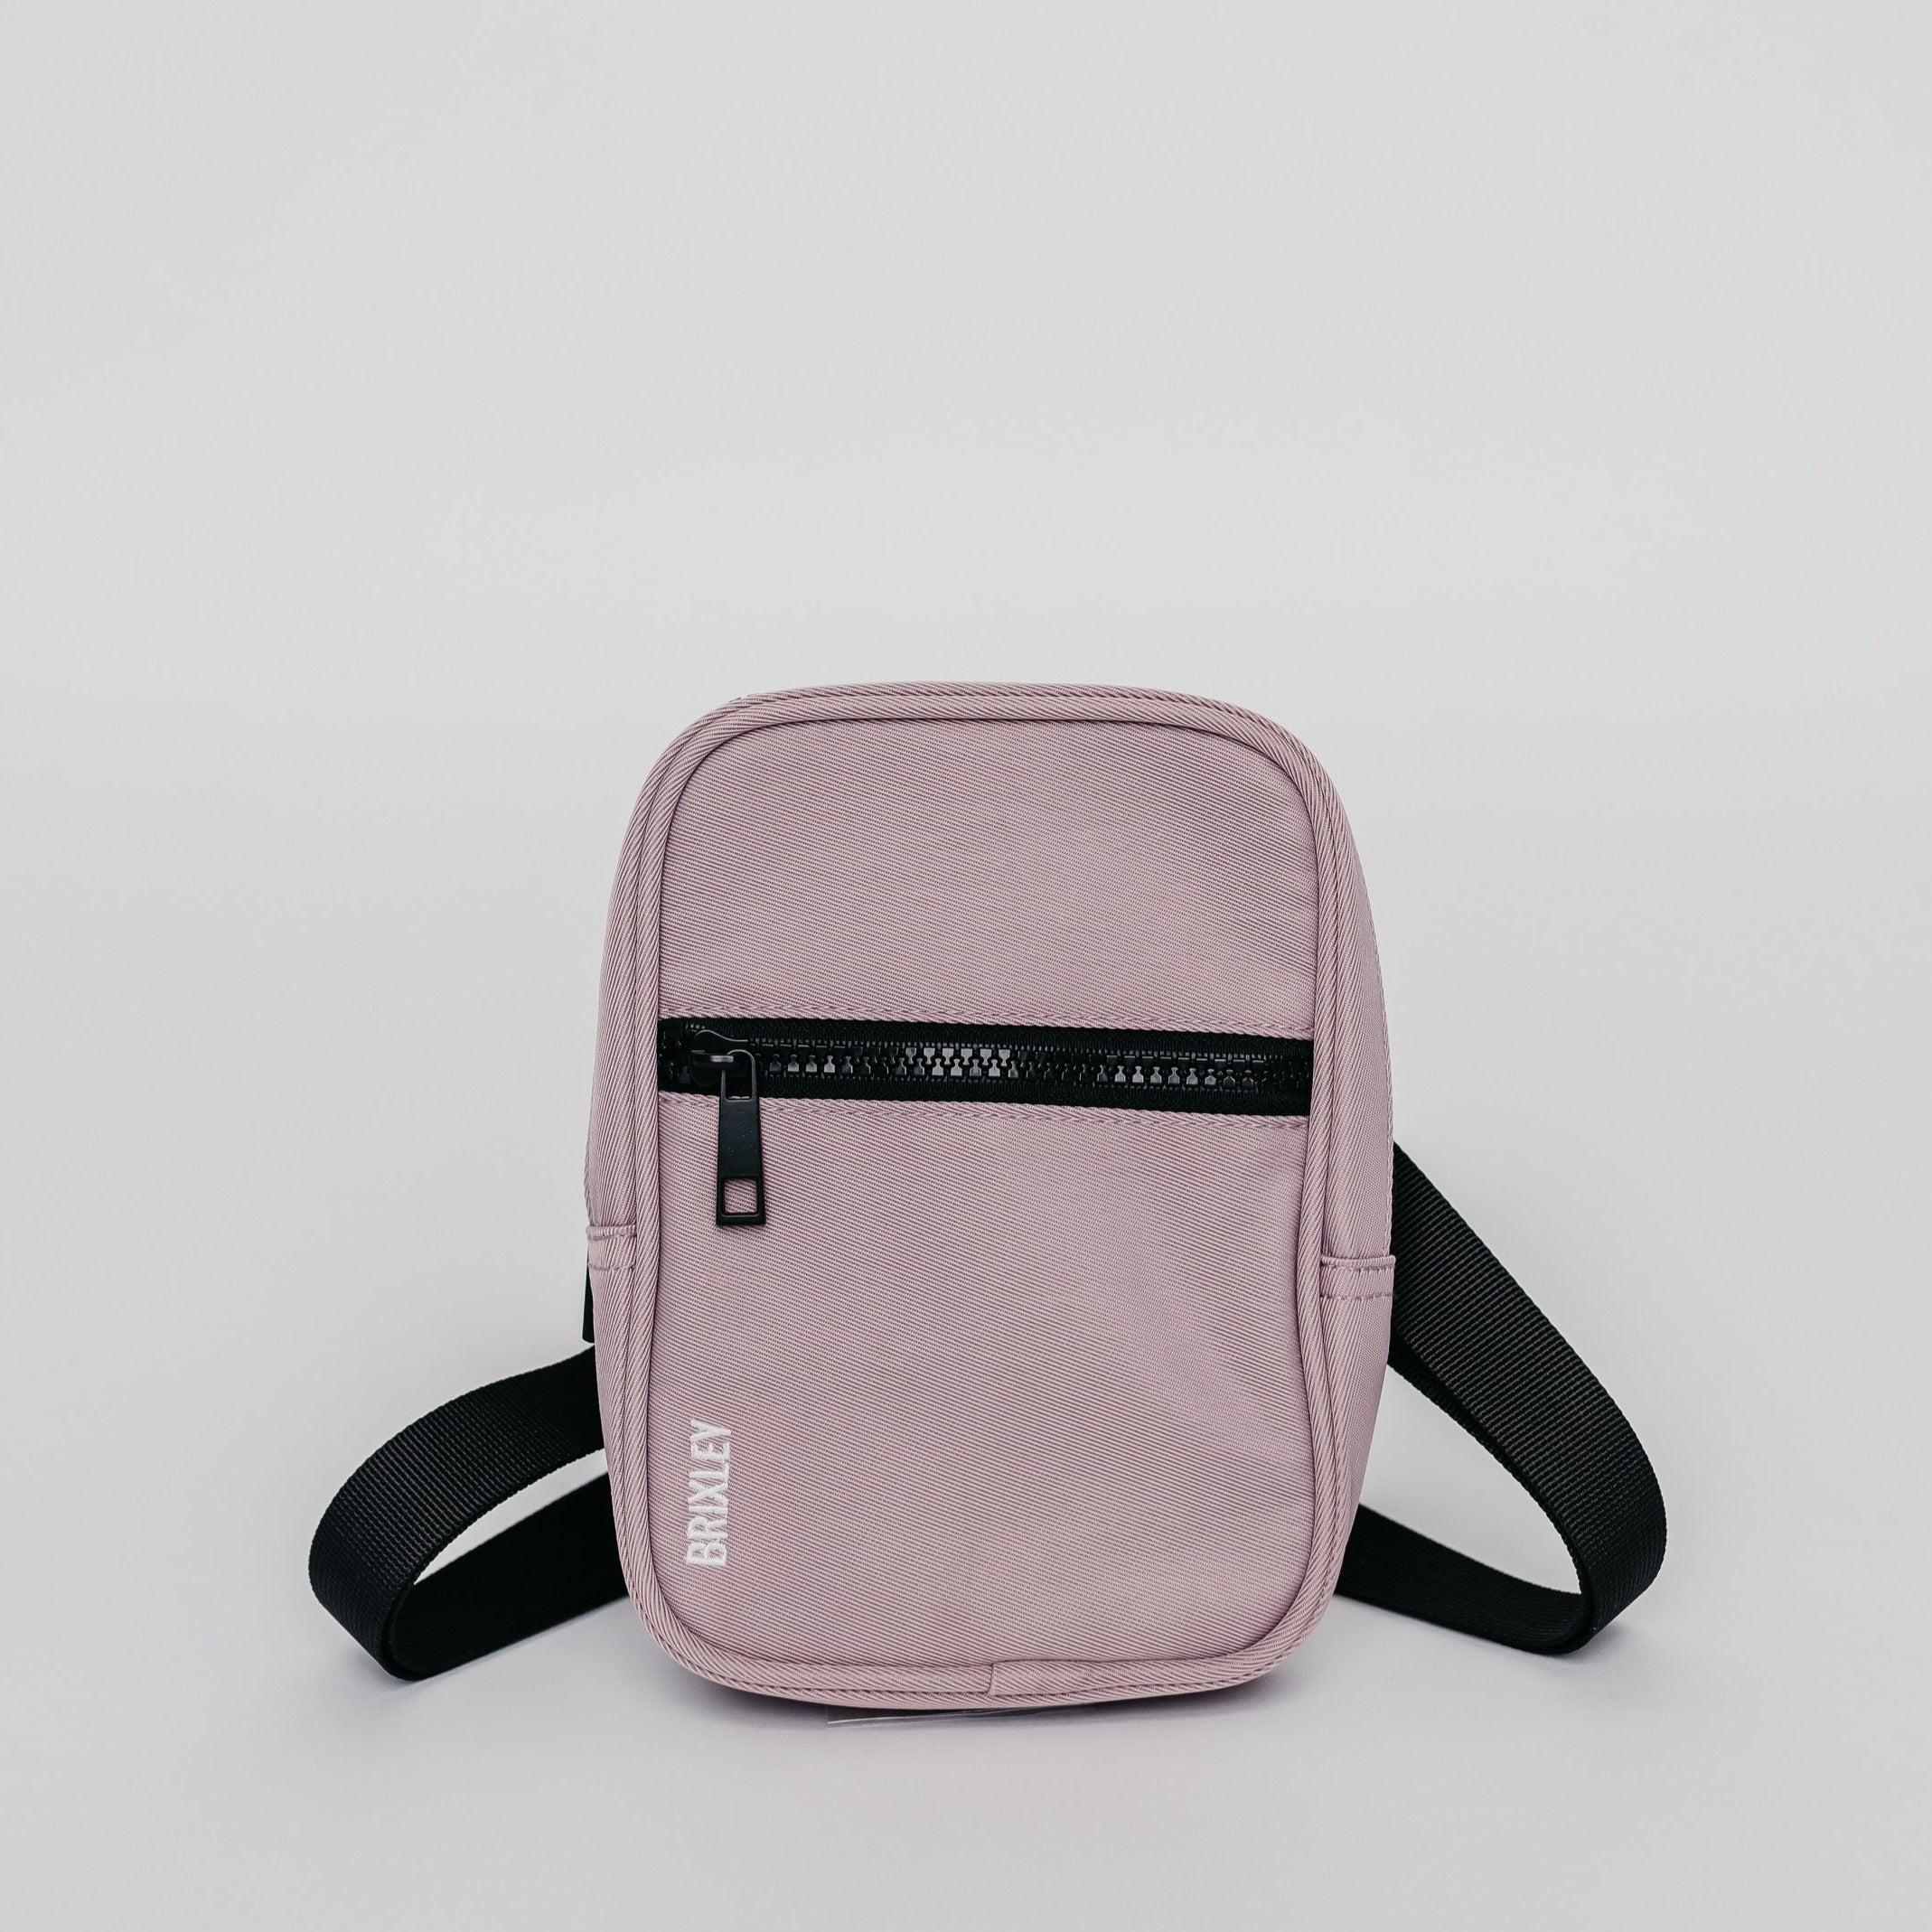 crossbody bag pink